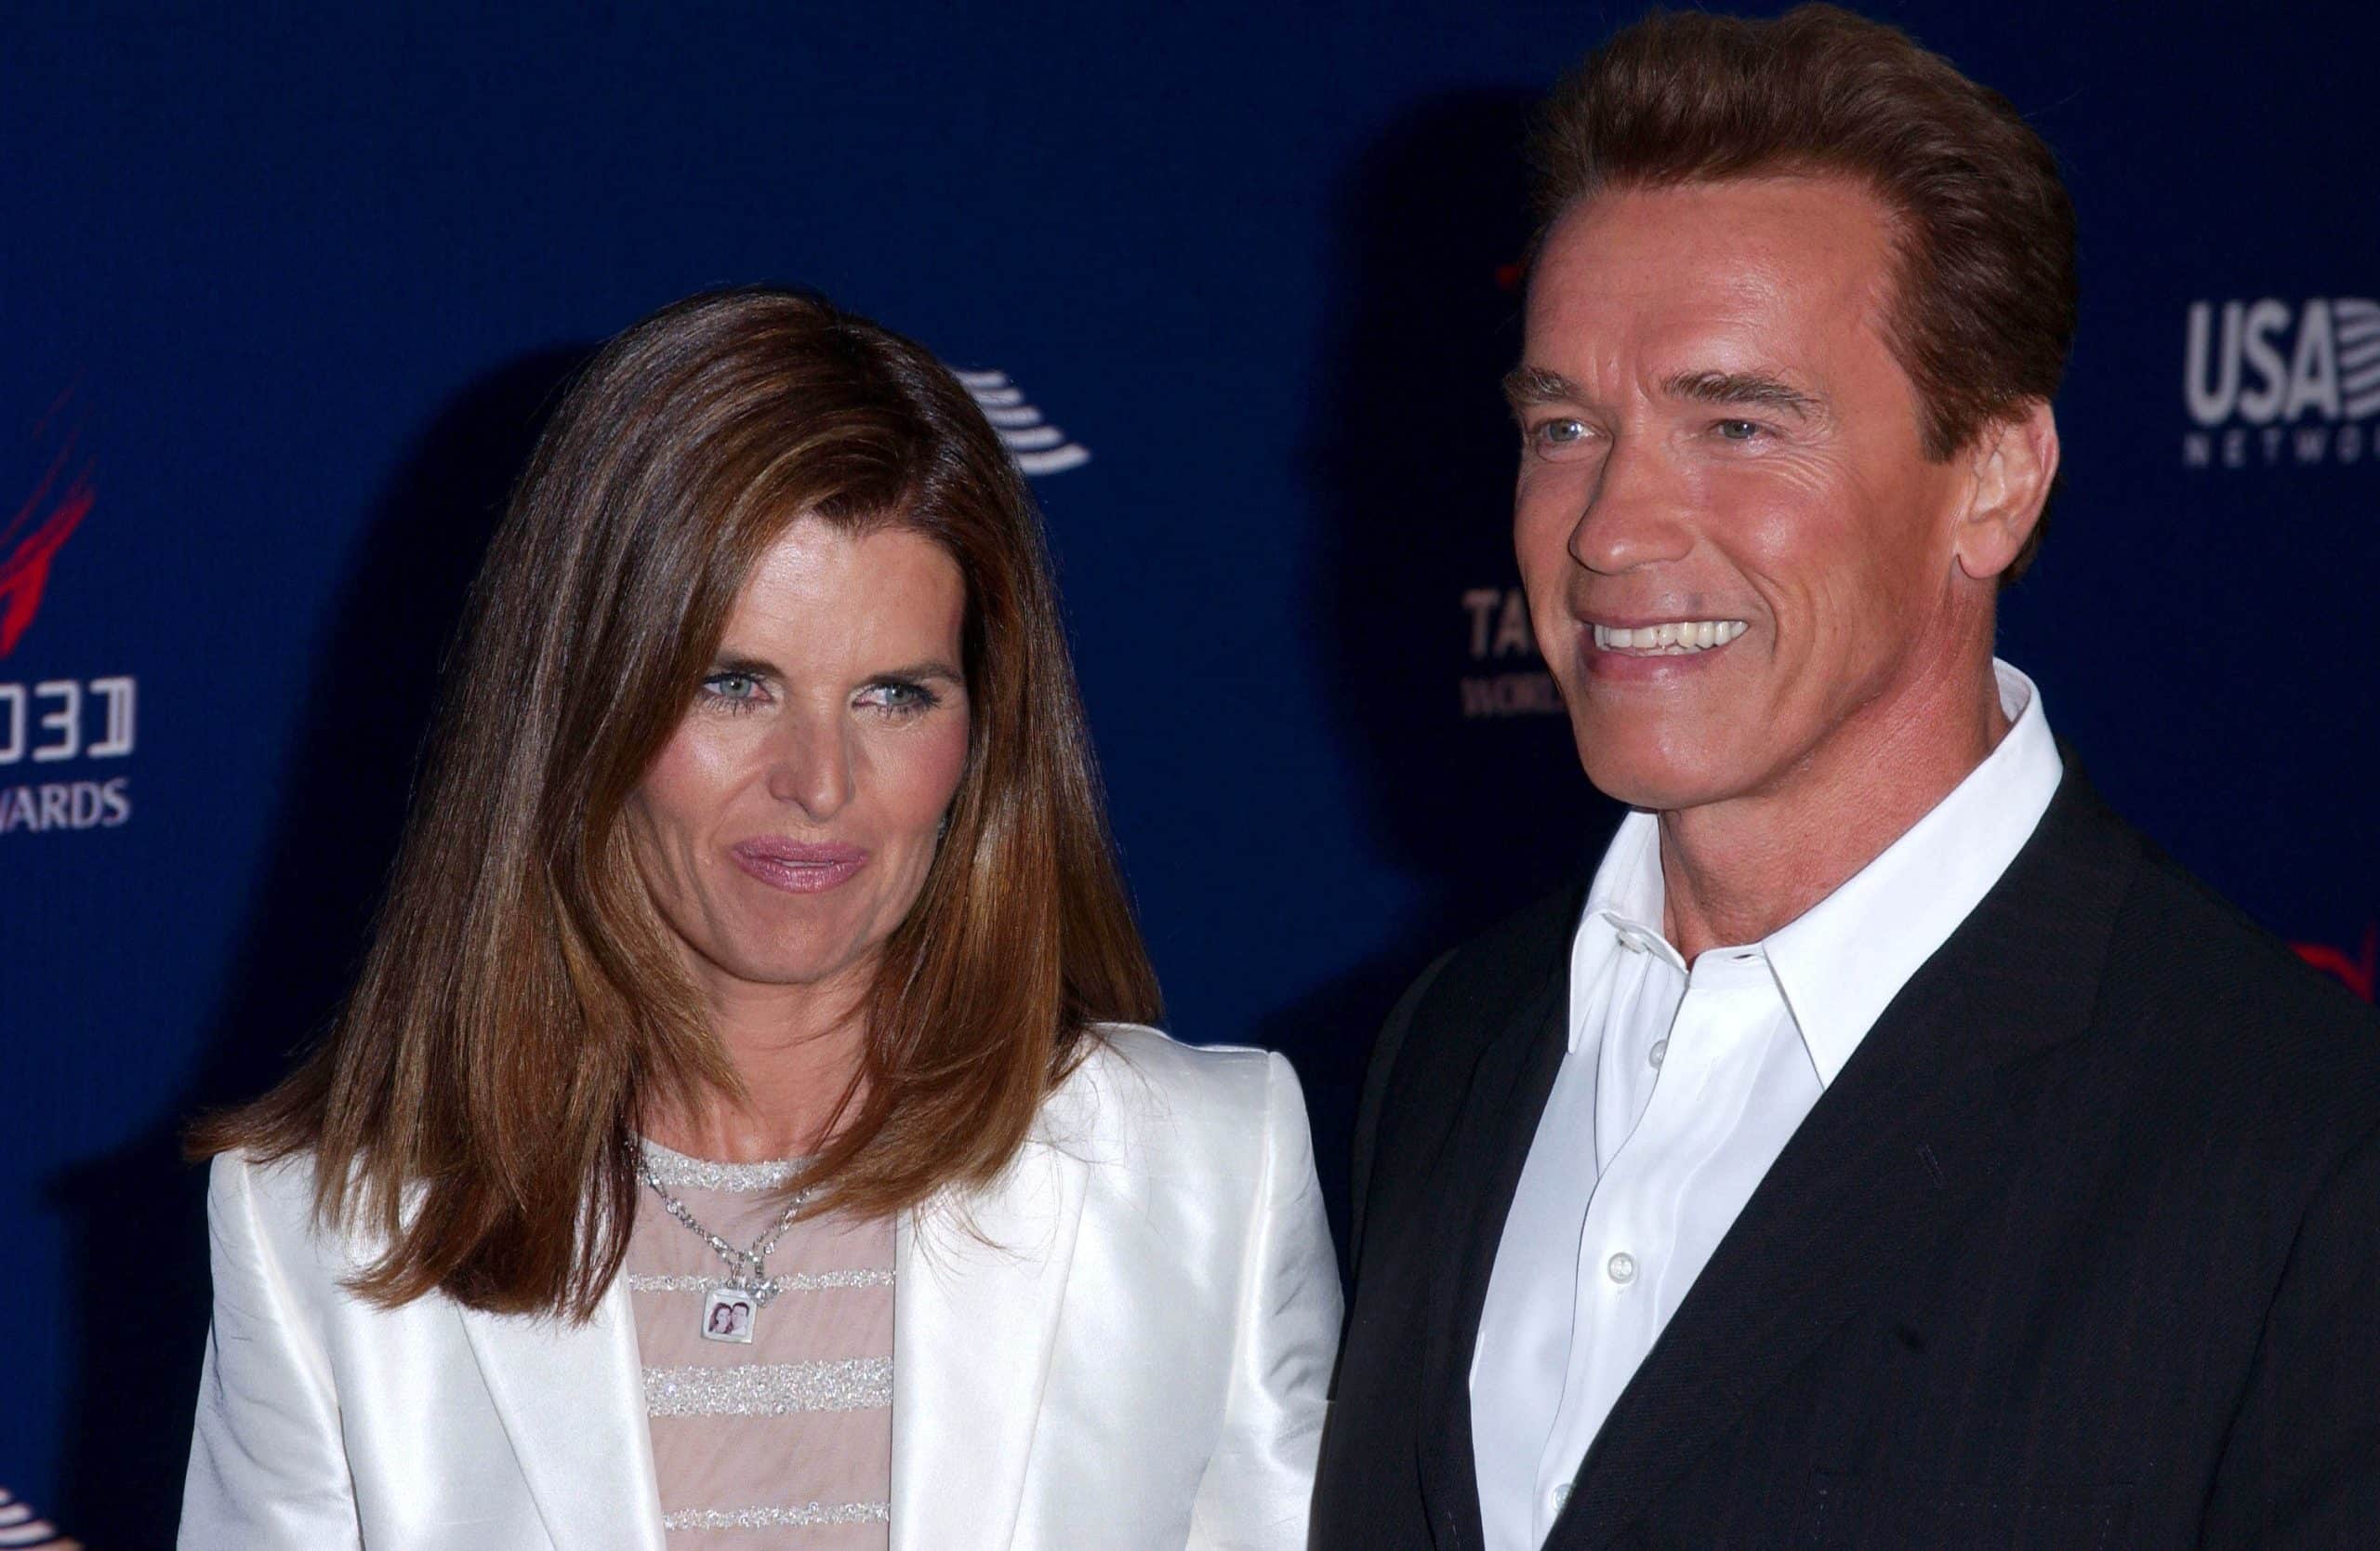 Arnold Schwarzenegger and wife Maria Shriver at Taurus